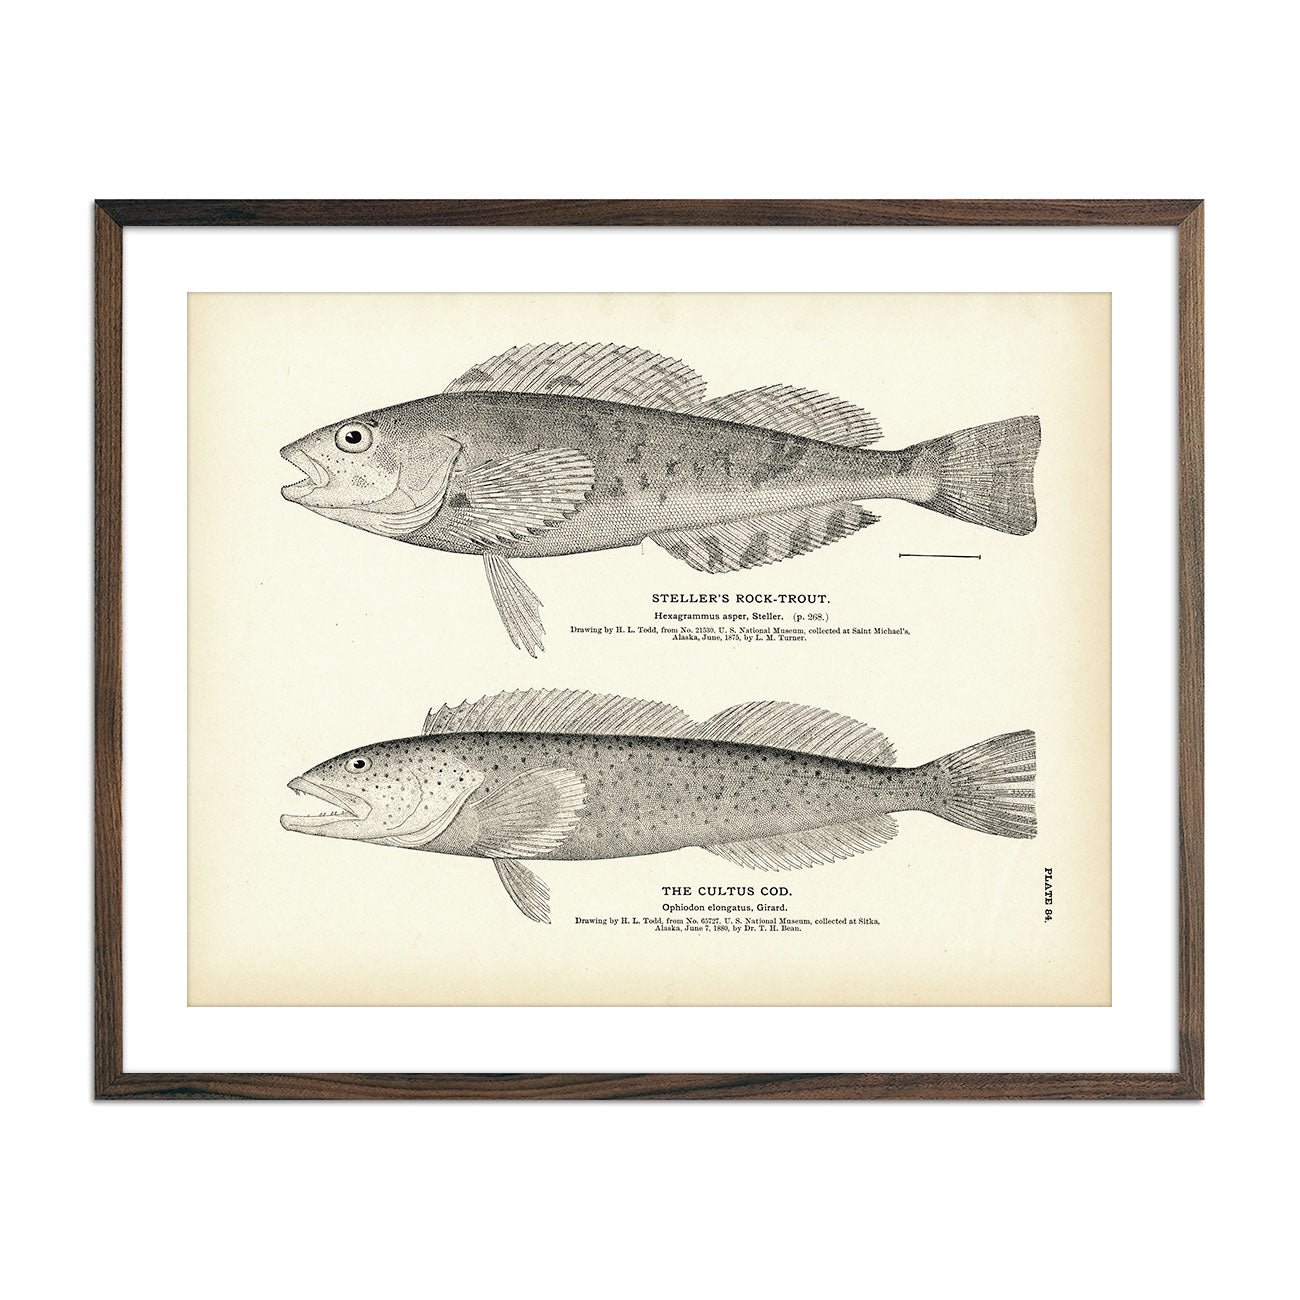 Vintage Steller's Rock-Trout and Cultus Cod fish print